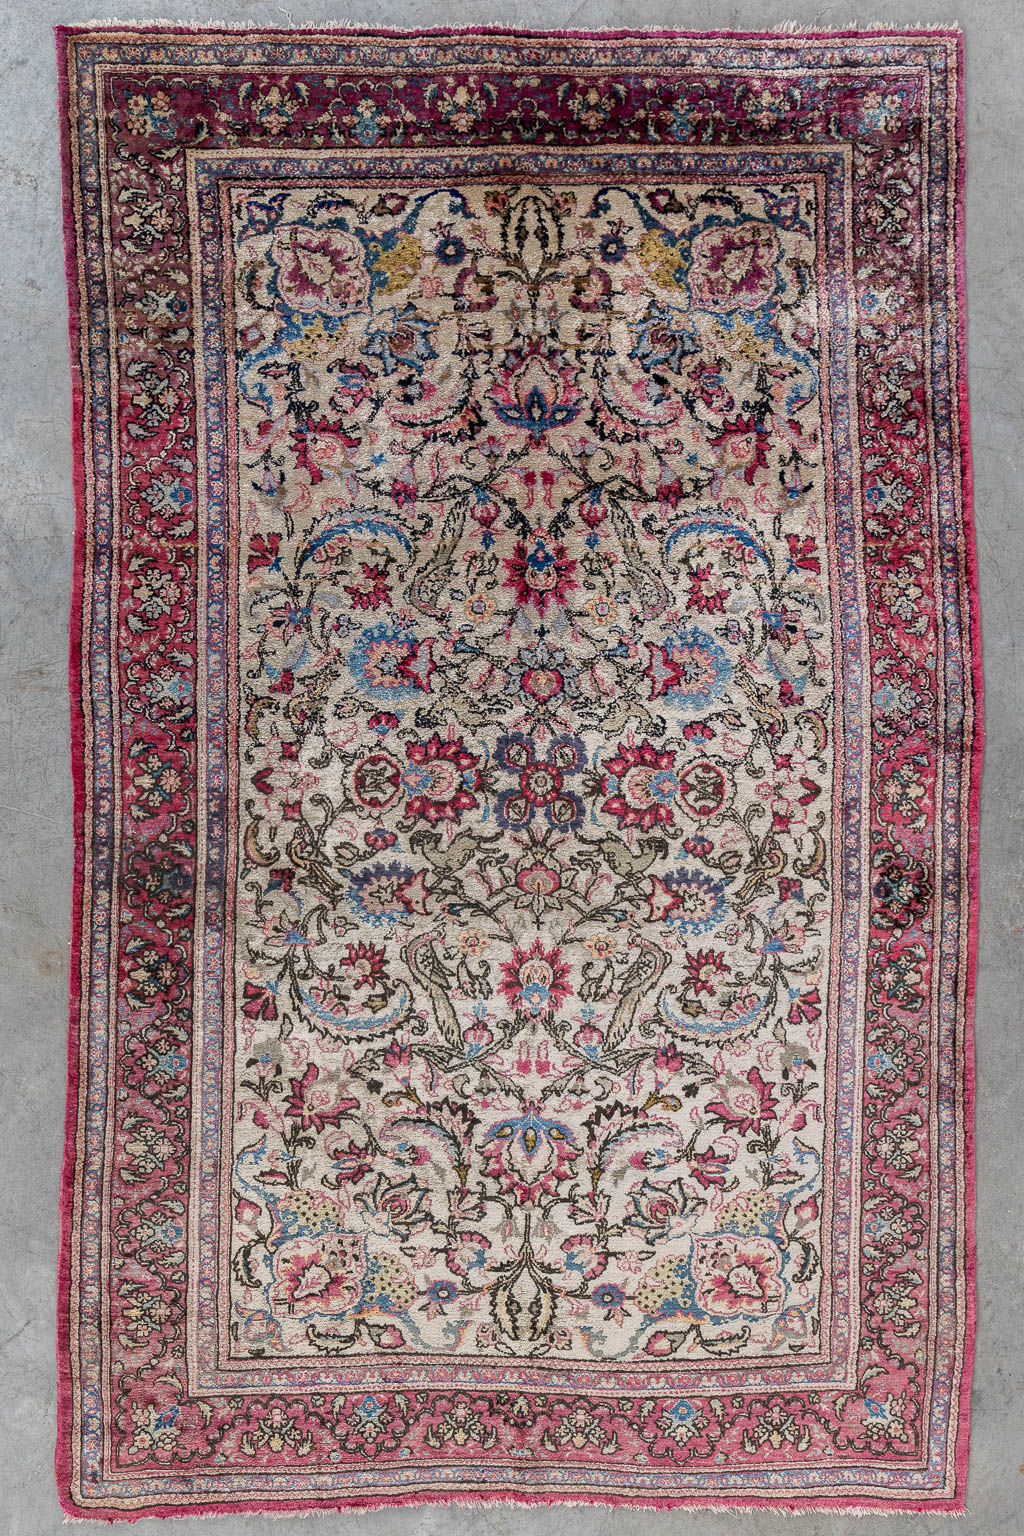 Lot 219 An Oriental hand-made carpet, Kashan, silk. (L:210 x W:135 cm)